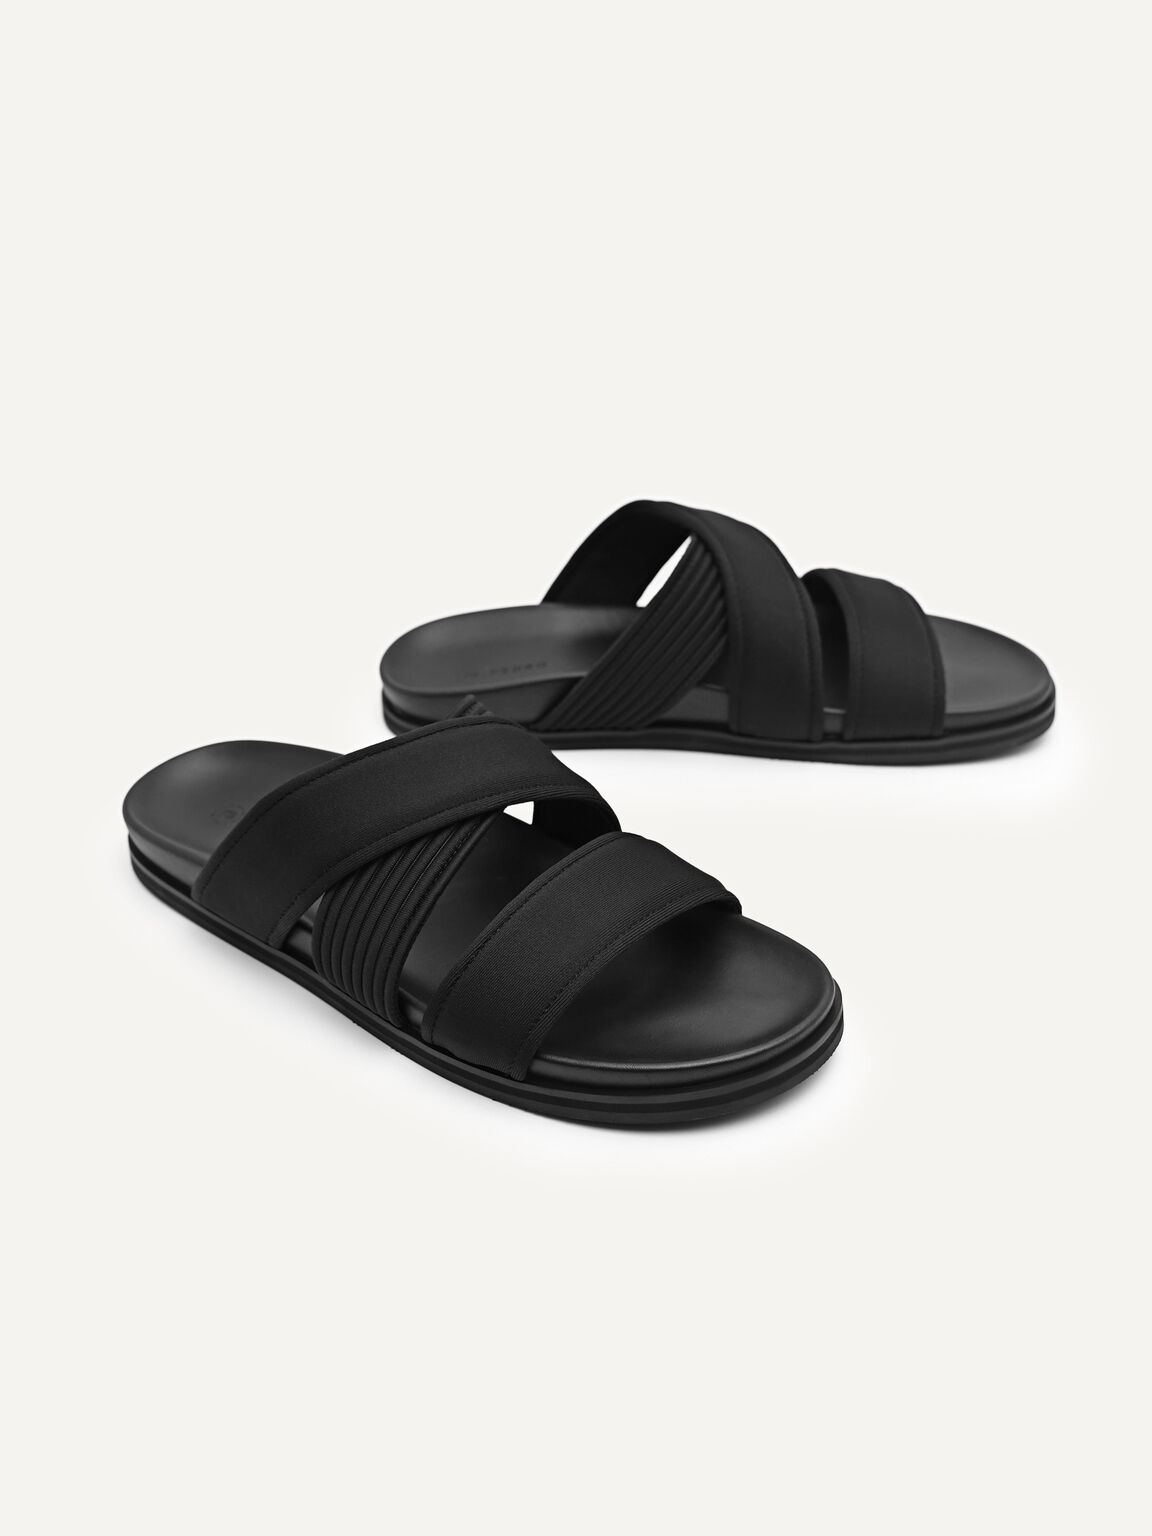 rePEDRO Pleated Sandals, Black